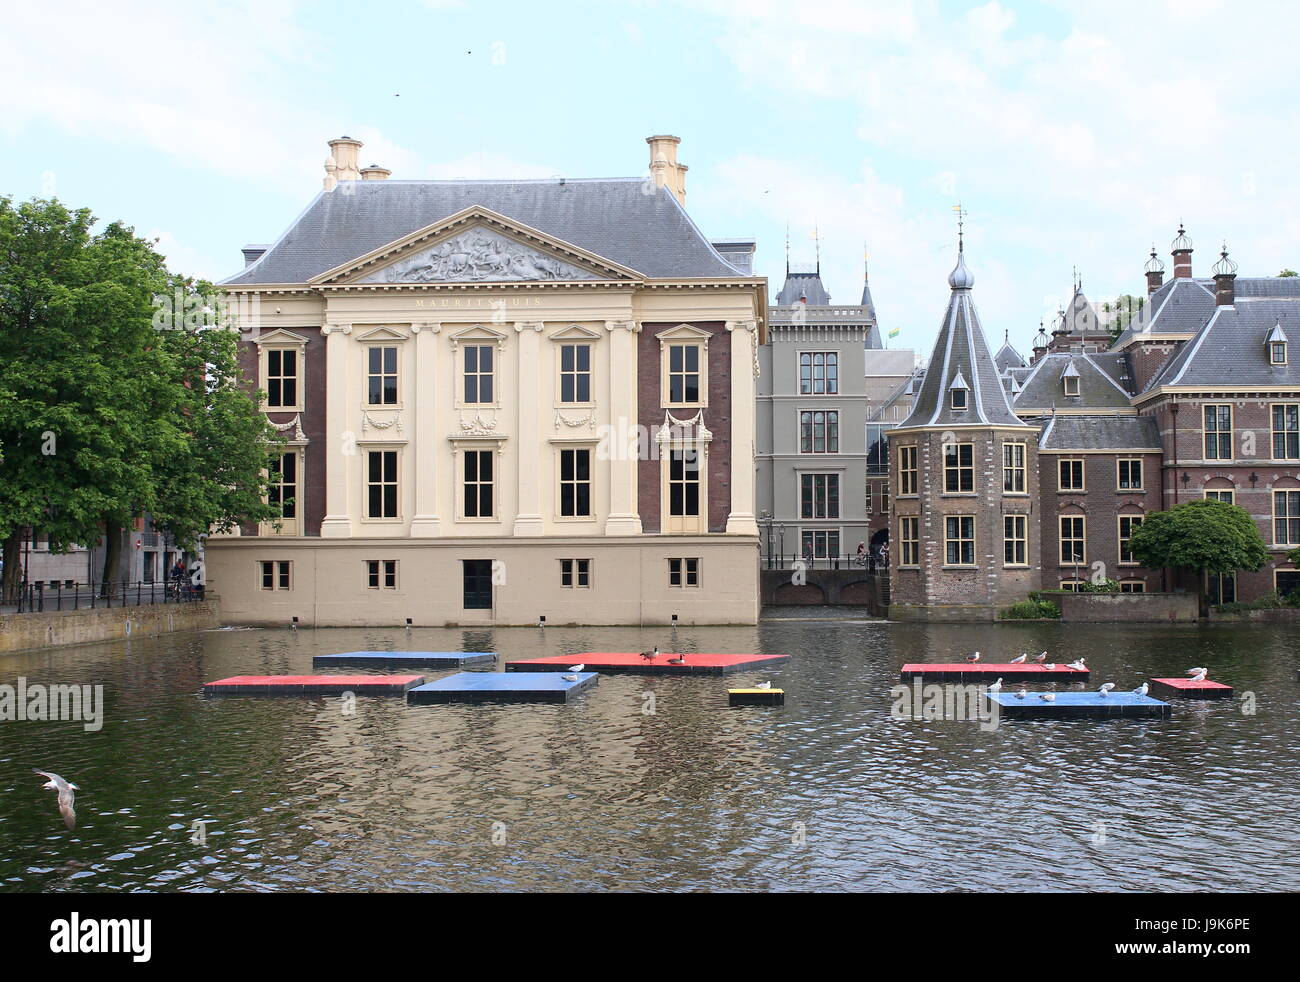 Mauritshuis &  Het Torentje (Little Tower), offices of Dutch Prime Minister Mark Rutte, The Hague (Den Haag), Netherlands. Hofvijver Pond, May 2017. Stock Photo